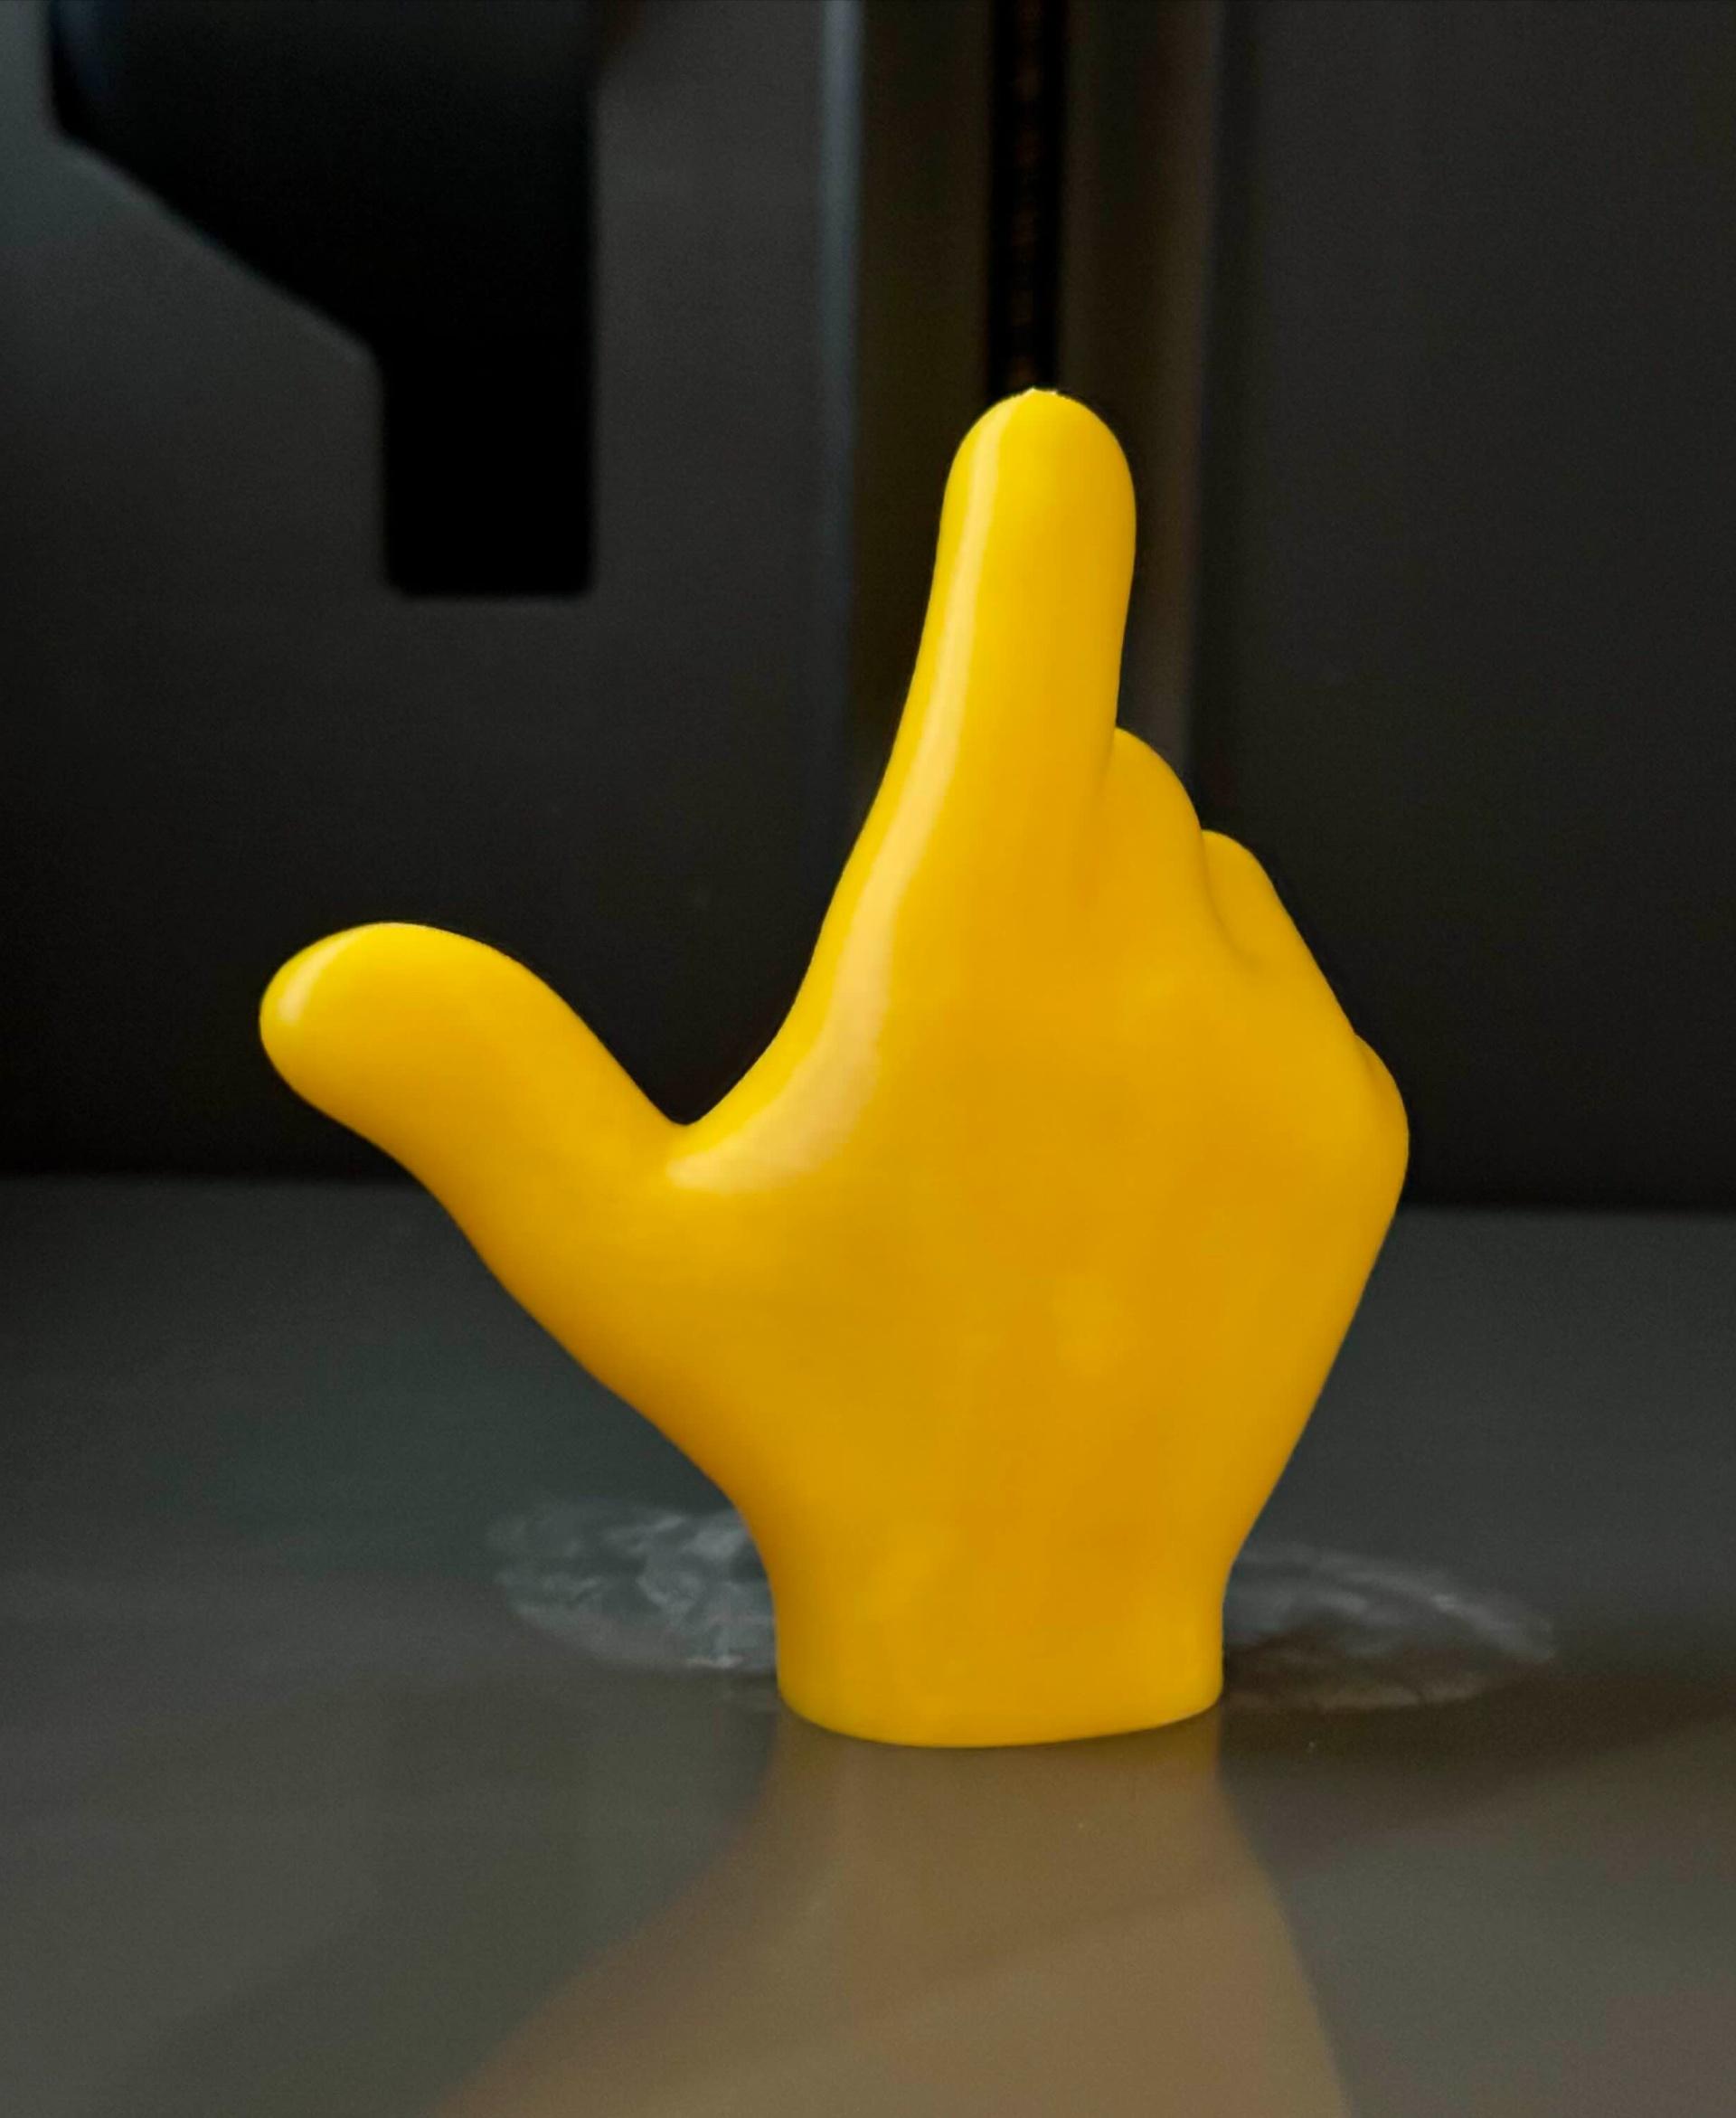 EMOJI HAND 🤔 THINKING FACE HAND 3d model